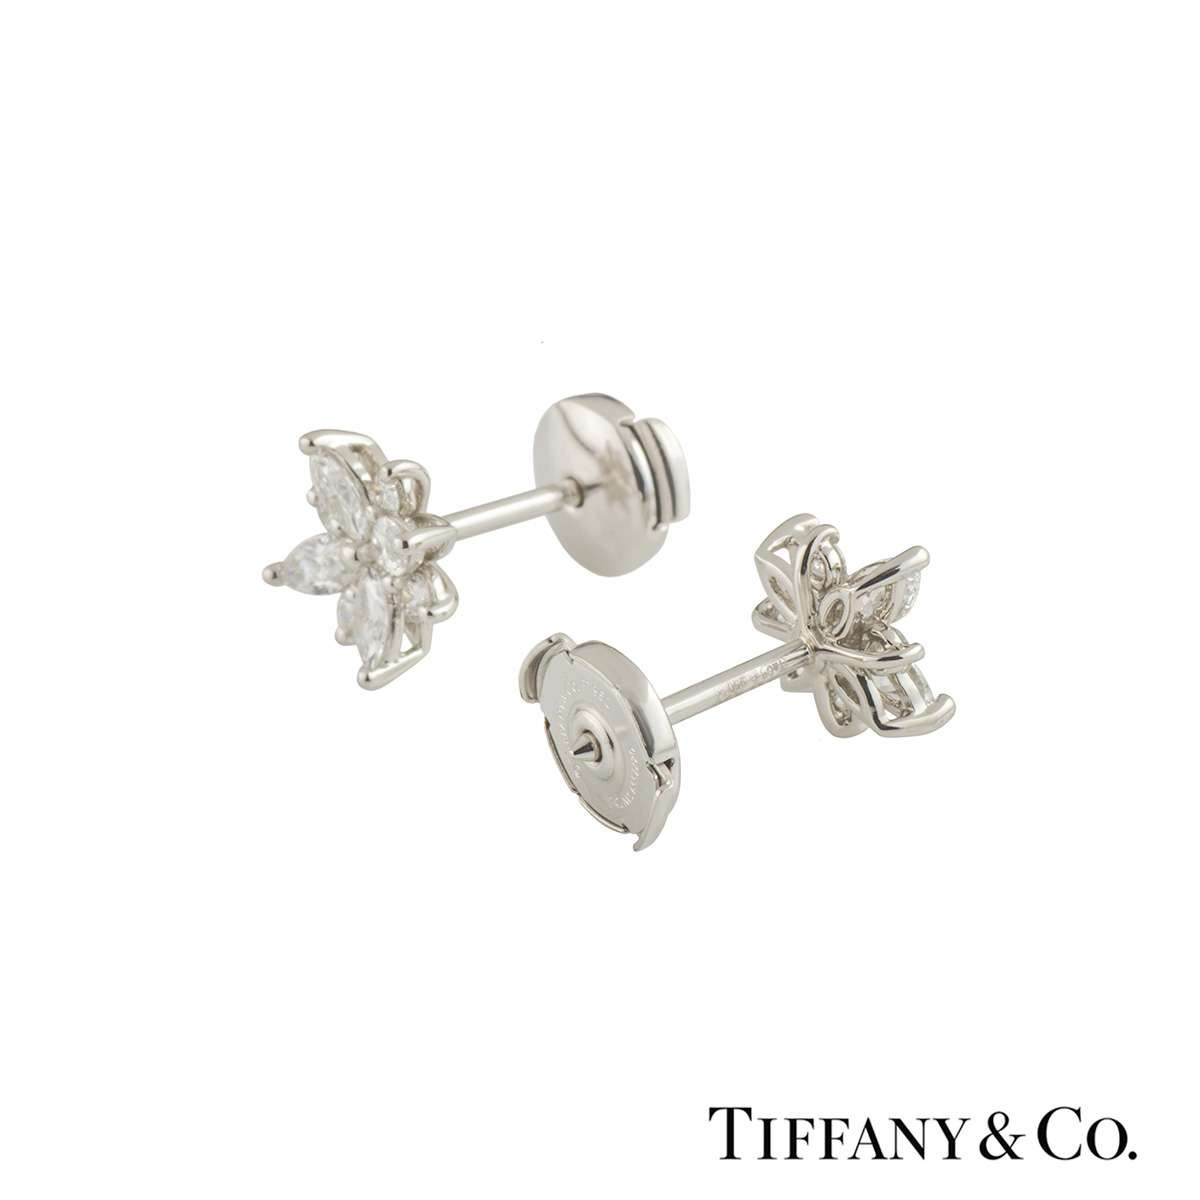 Tiffany Victoria Earrings
 Tiffany & Co Victoria Earrings